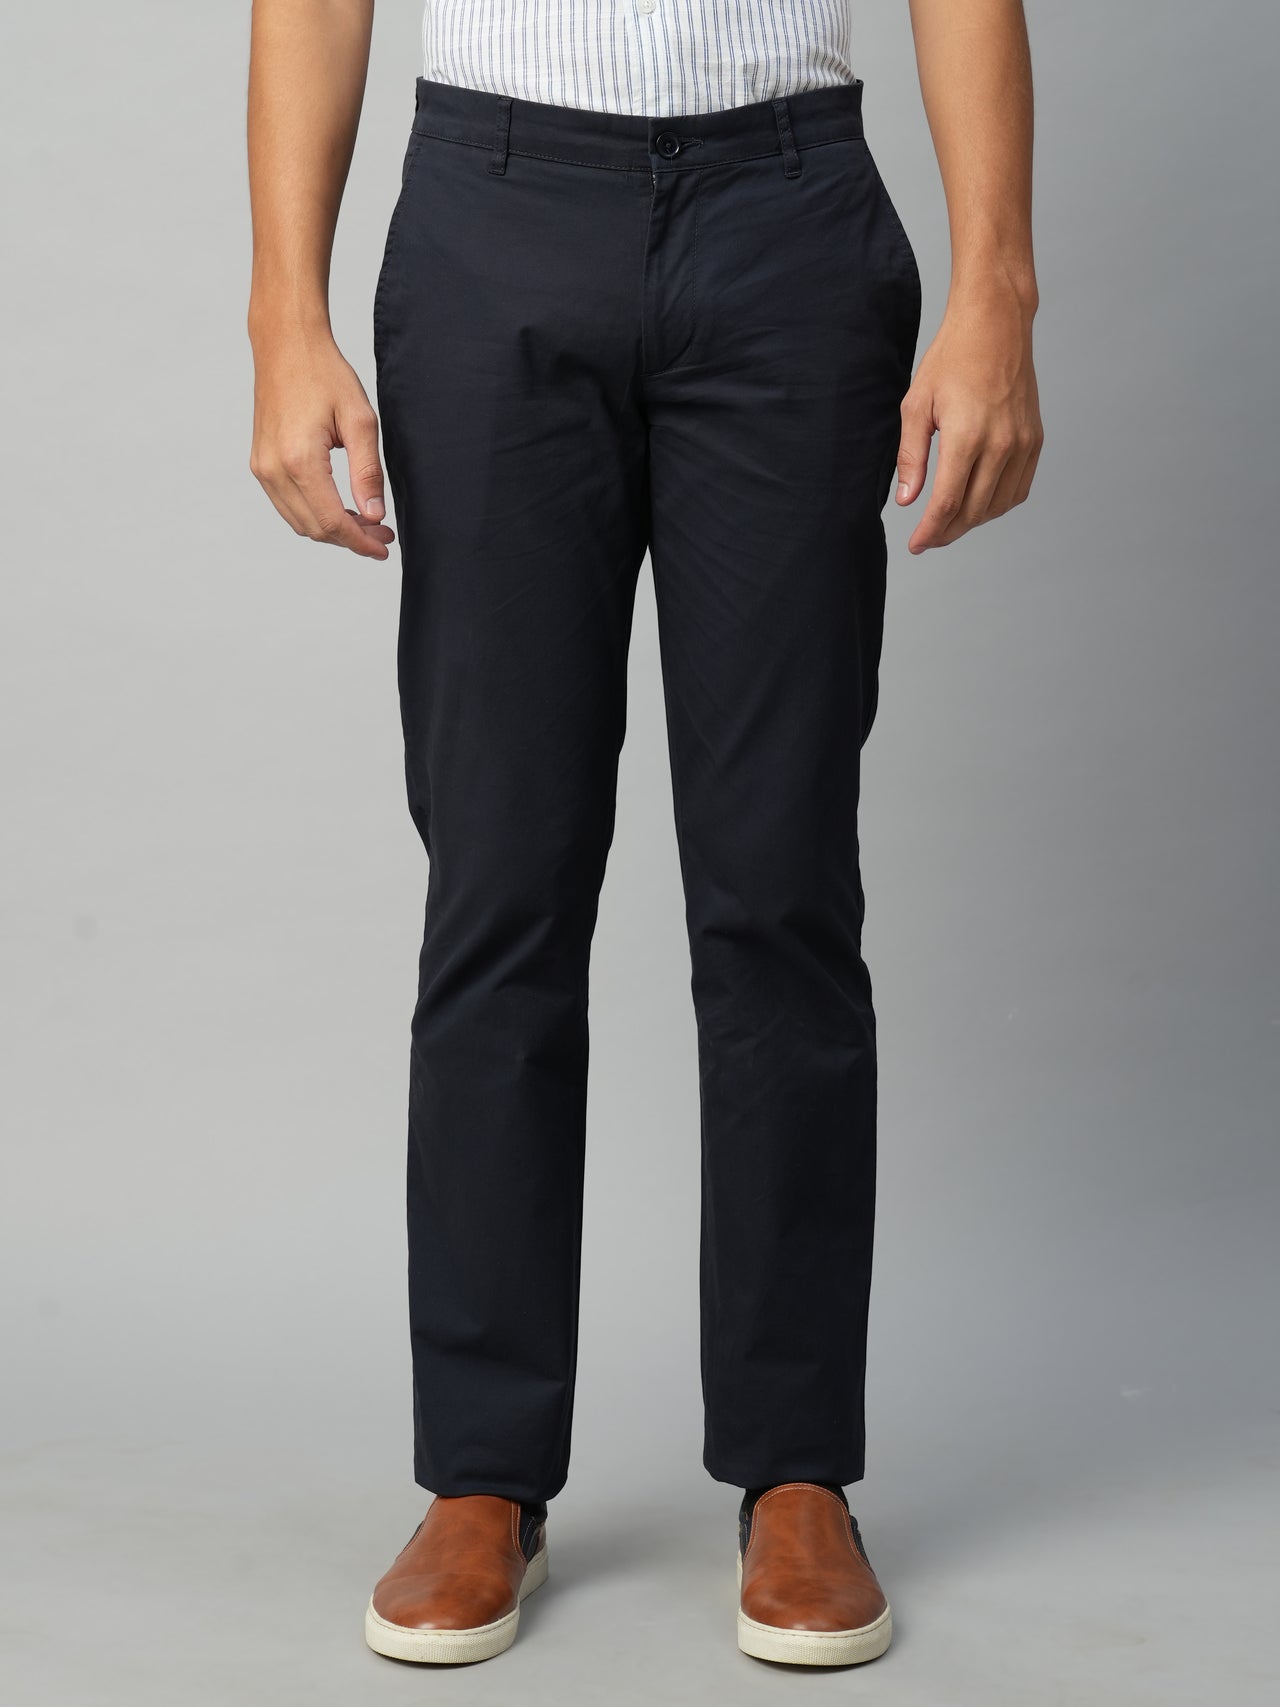 Men's Navy Cotton Lycra Regular Fit Pant